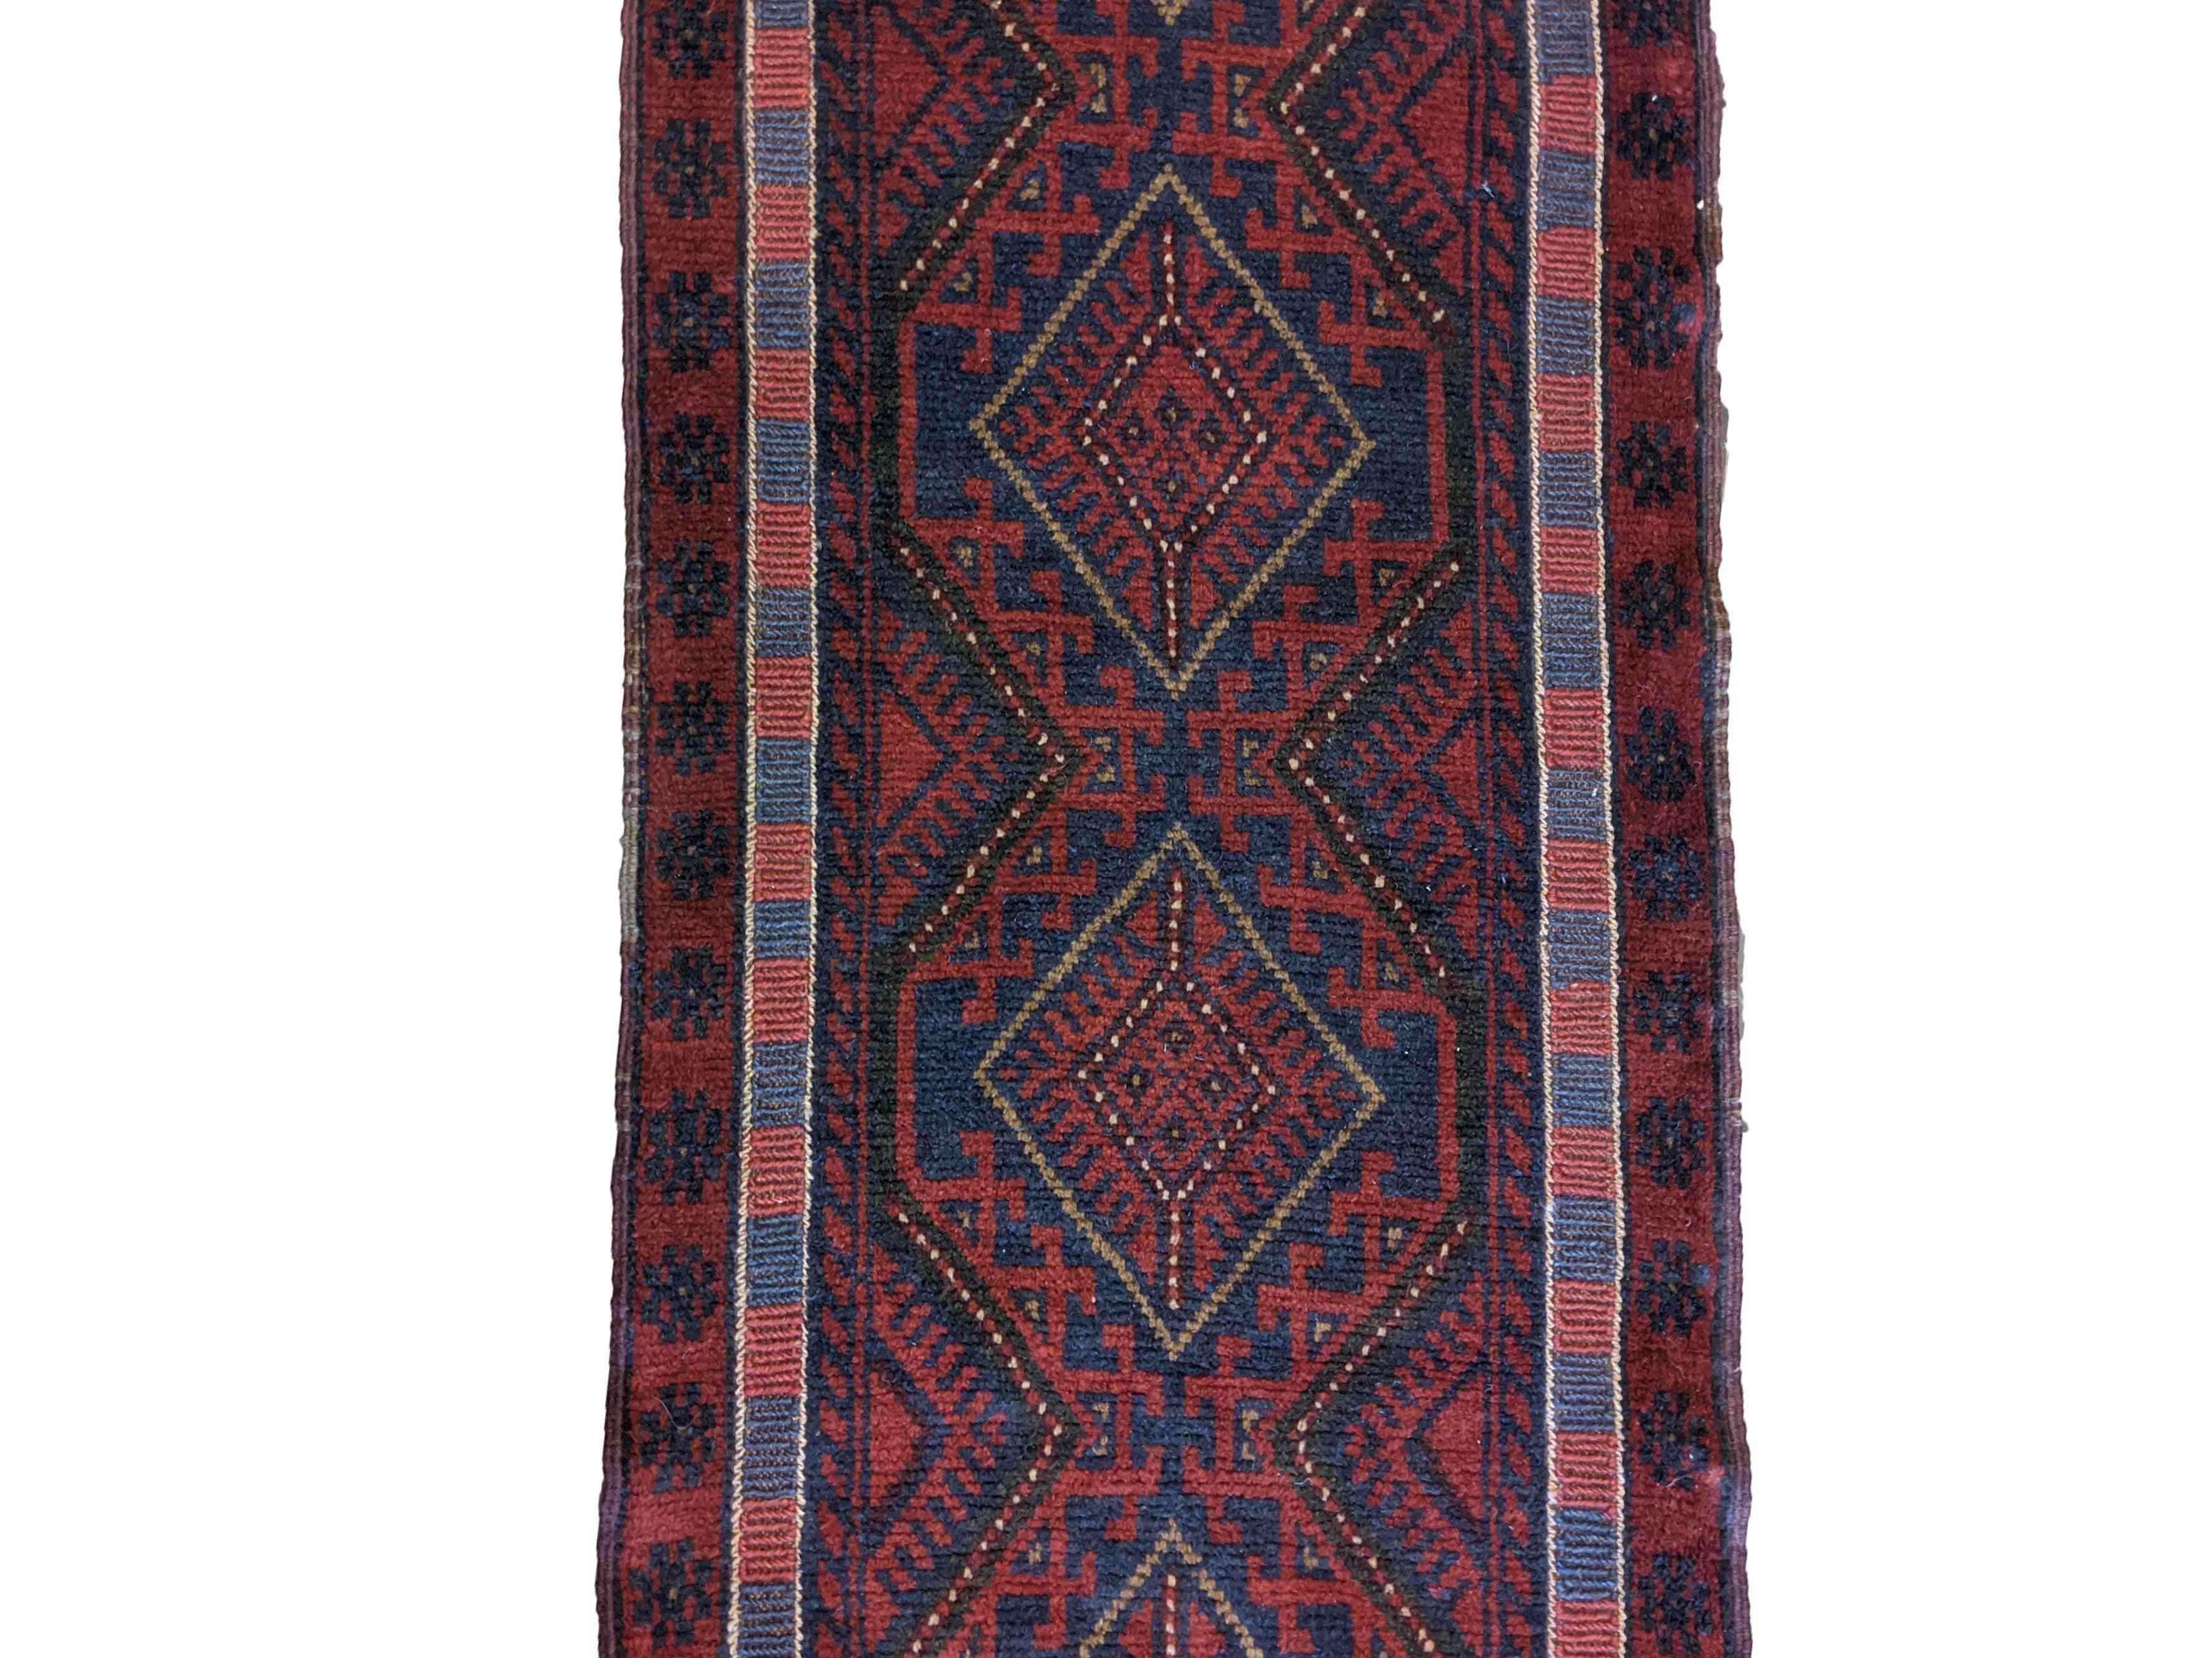 64 x 254 cm Afghan Mushwani Tribal Red Rug - Rugmaster